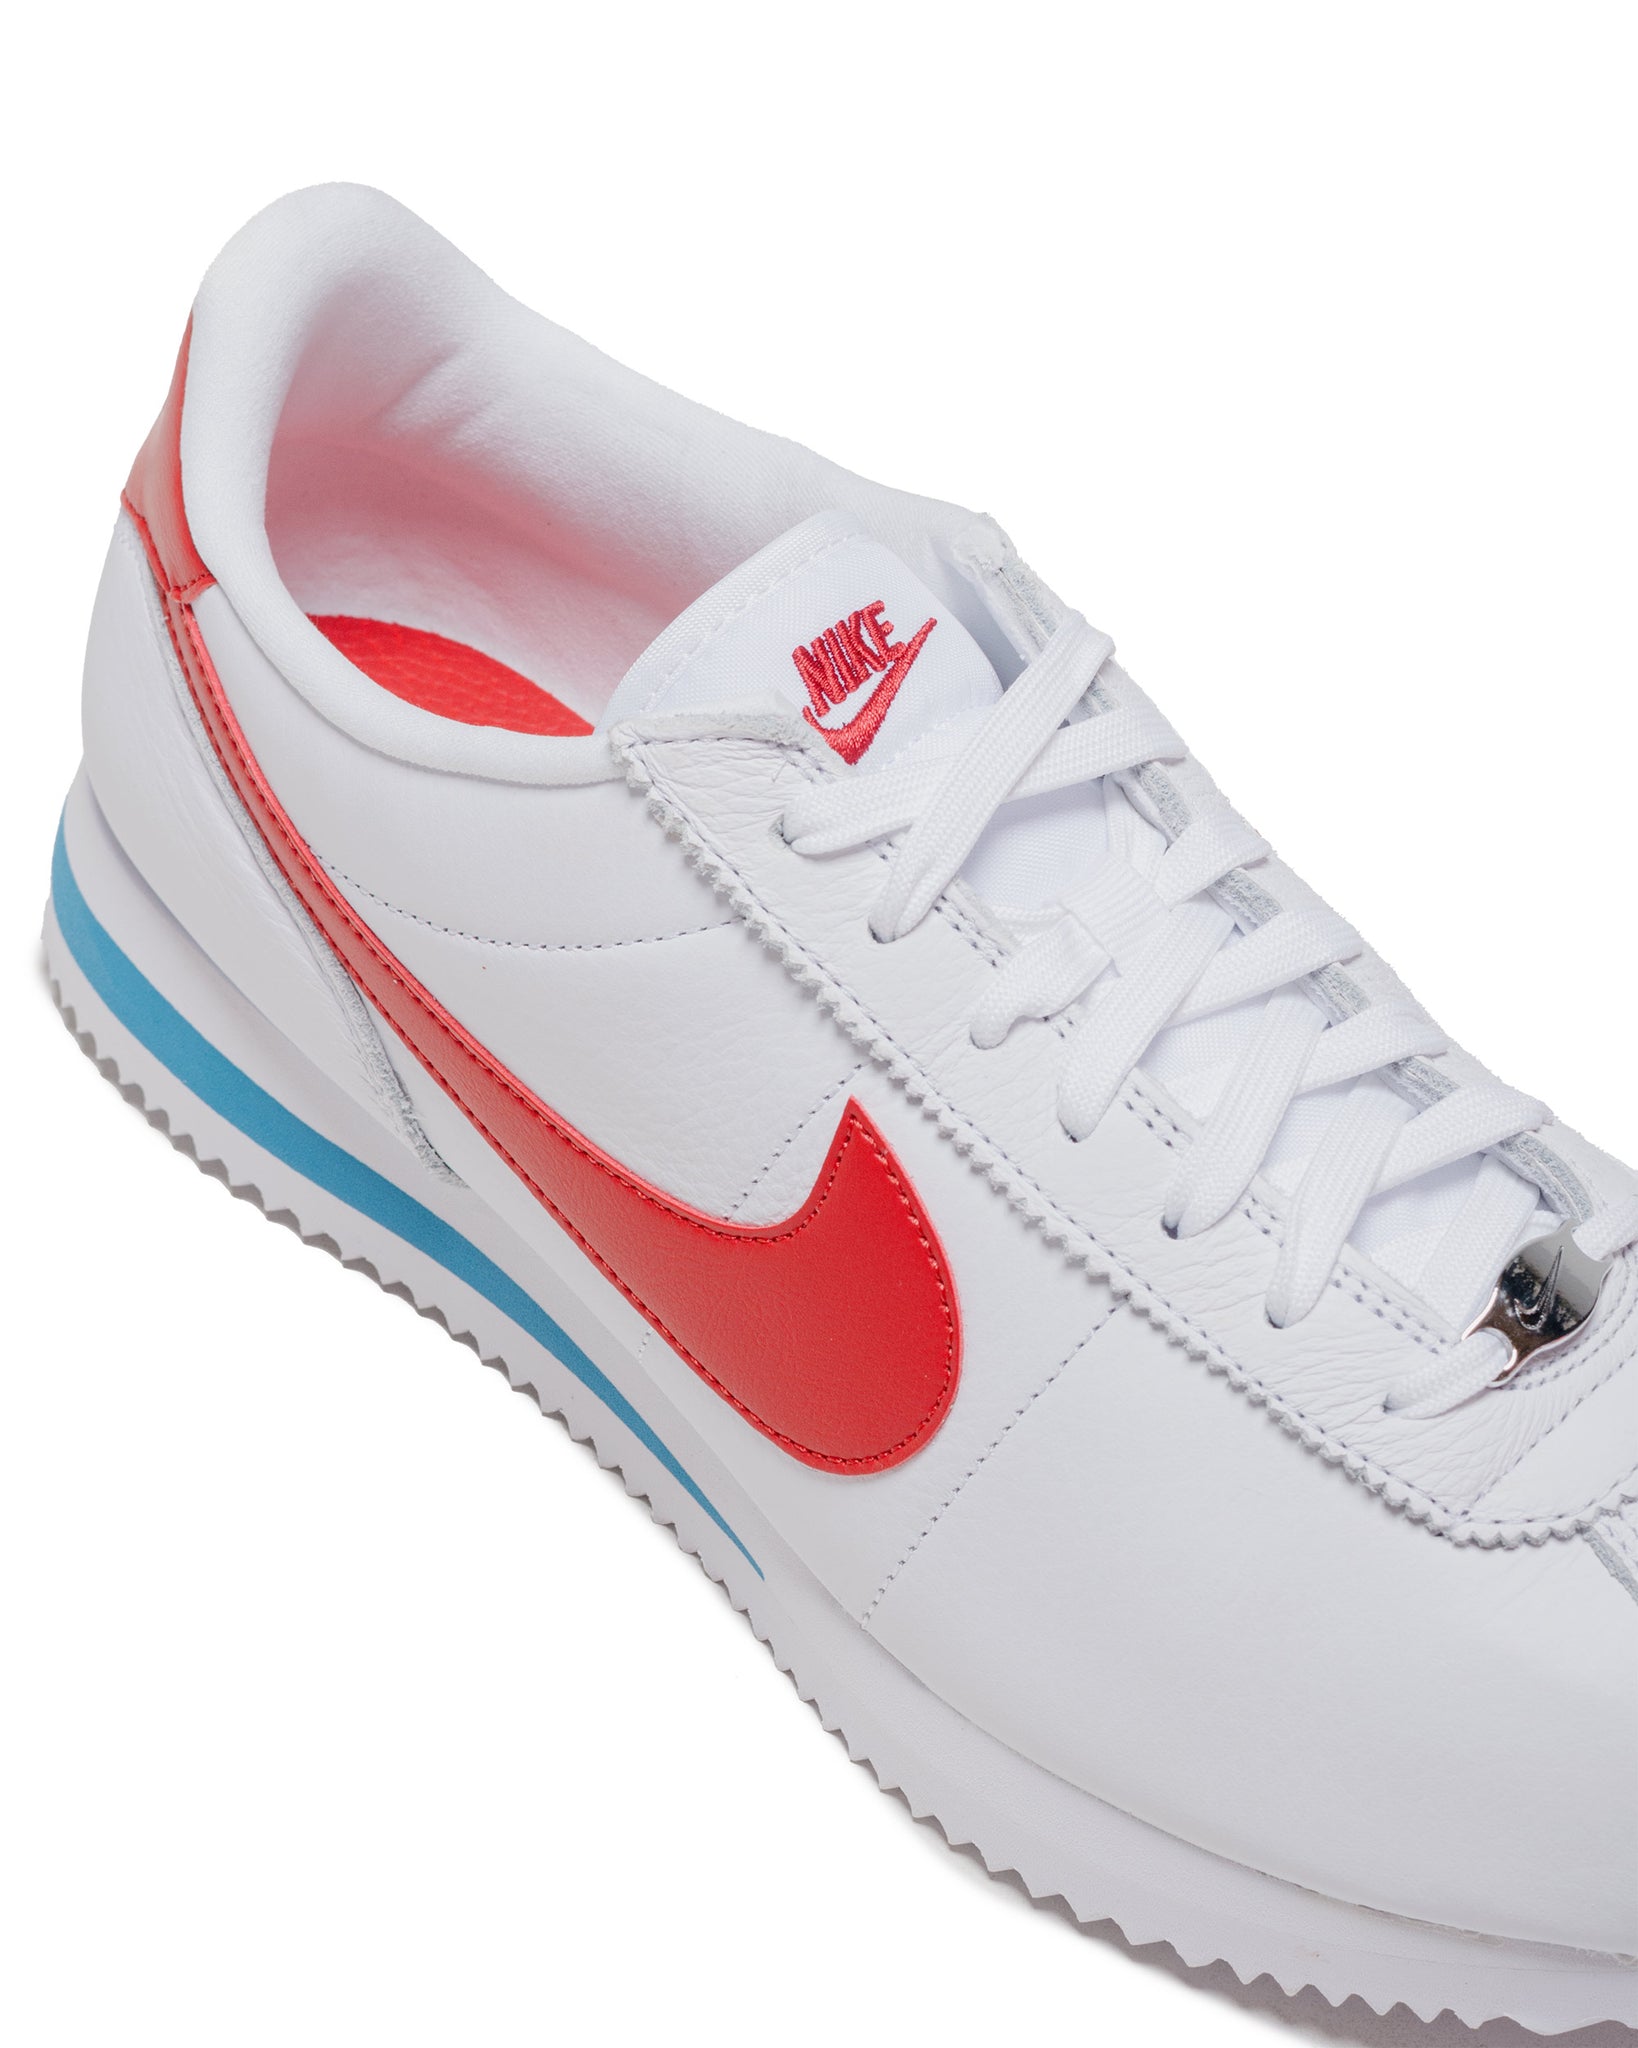 Nike Cortez Varsity Red/White/Blue close